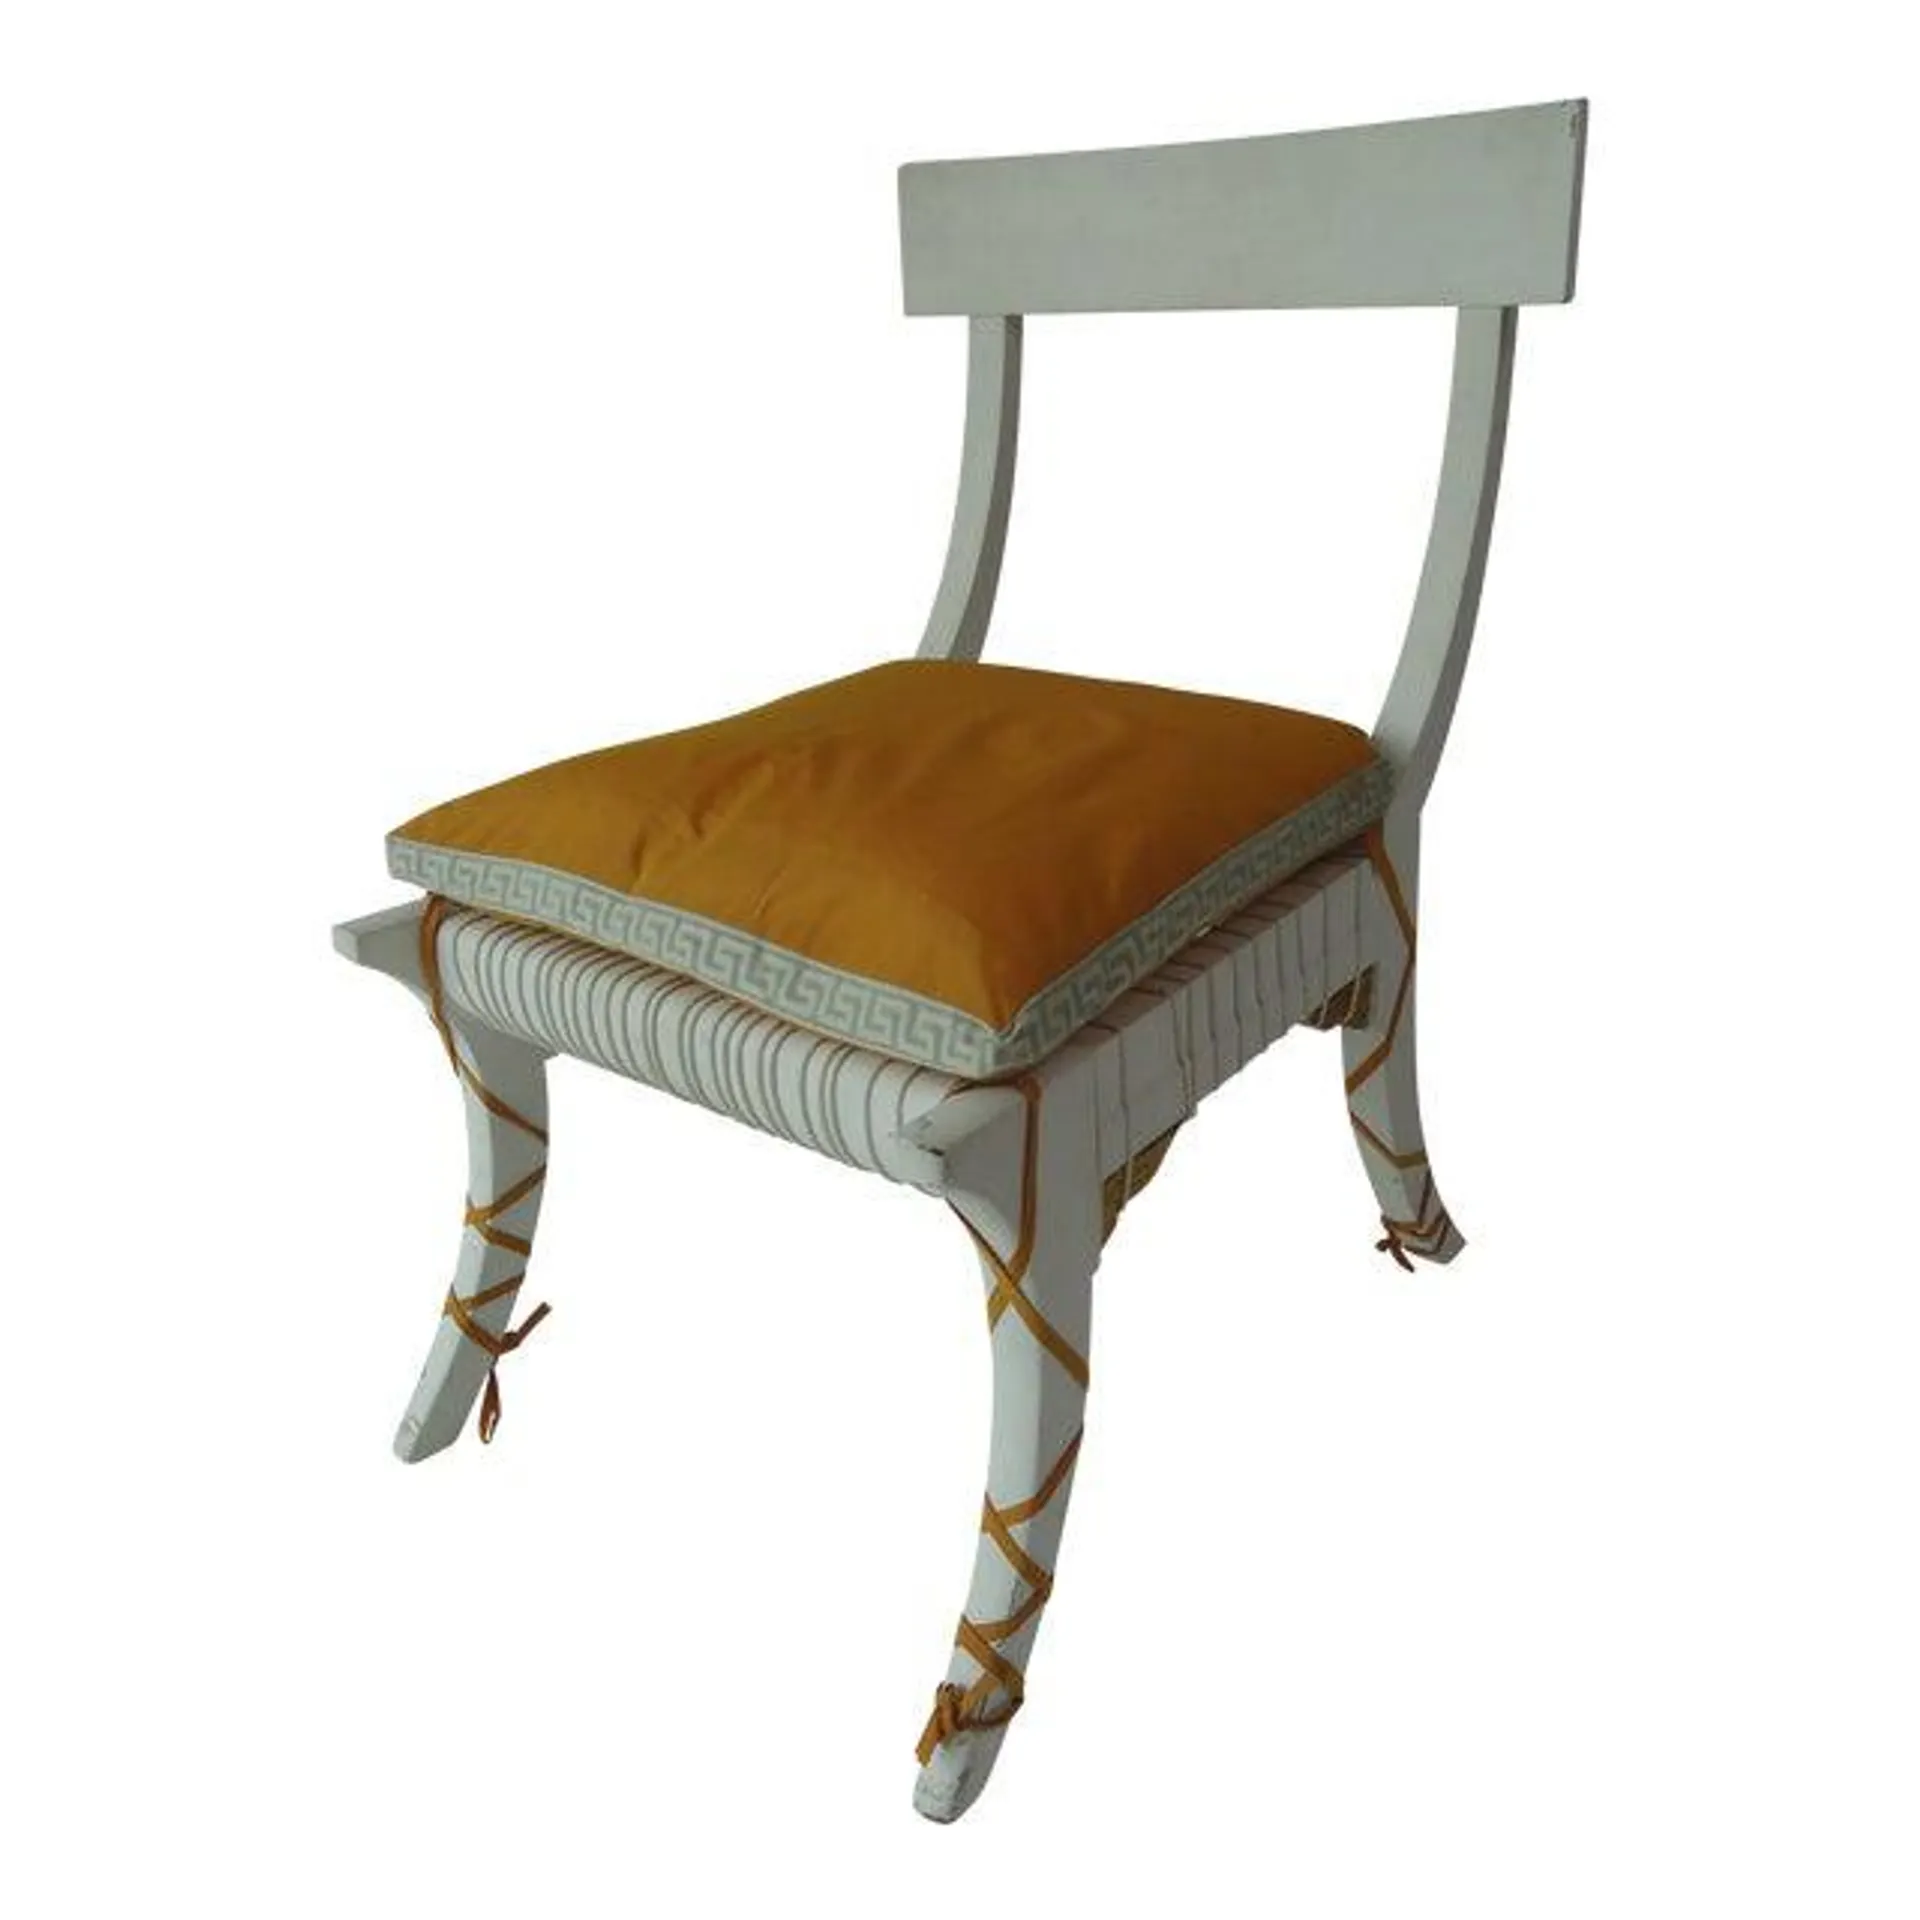 1970s Vintage Klismos-Style Chair